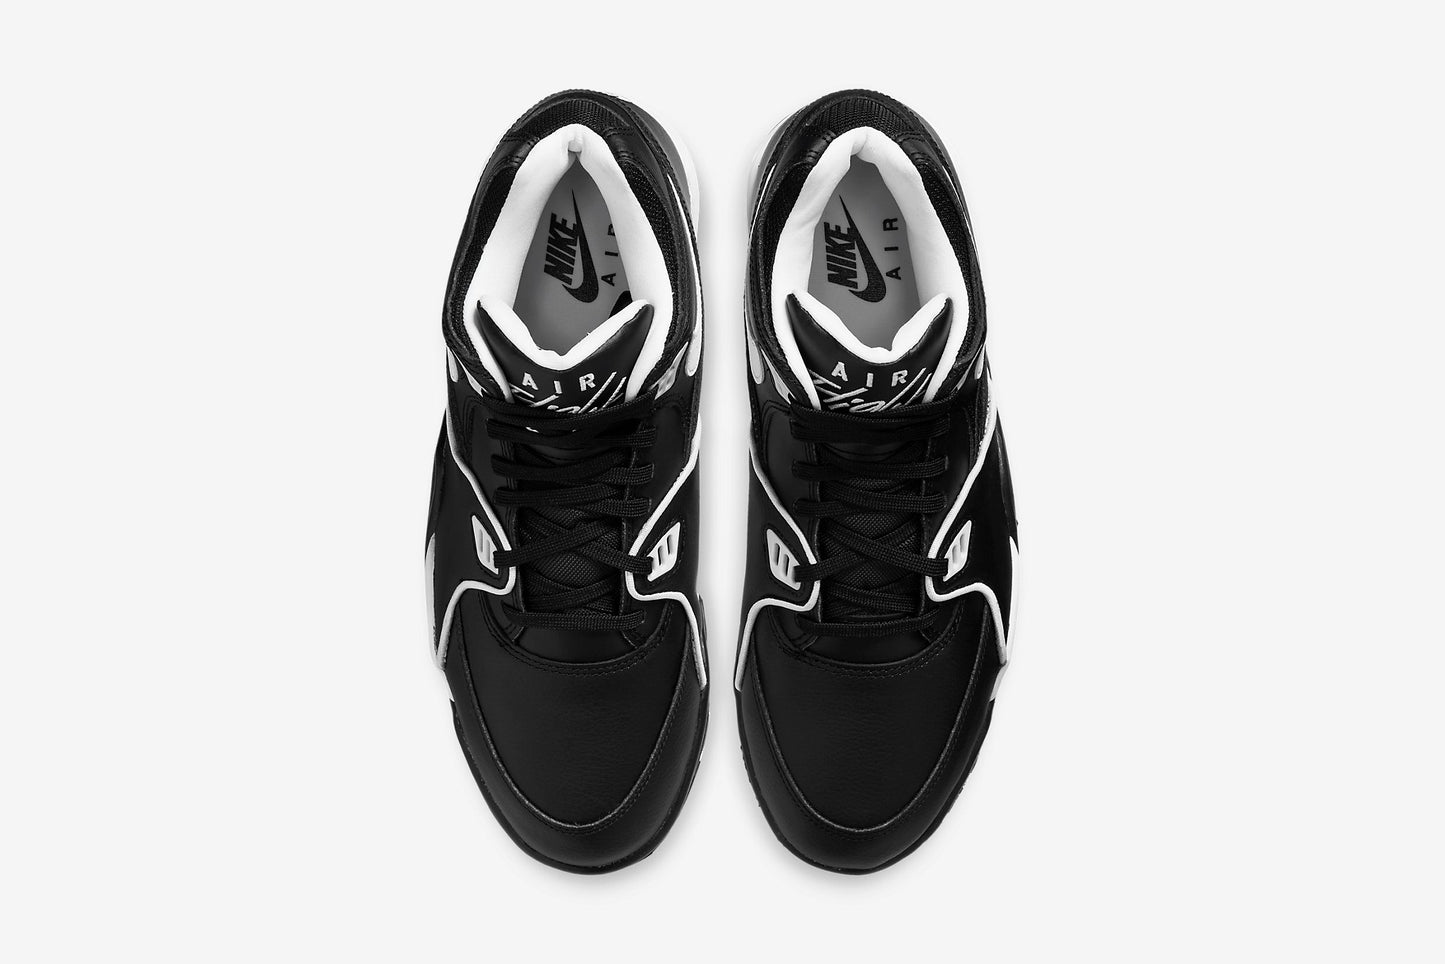 Nike "Air Flight '89" M - Black / White